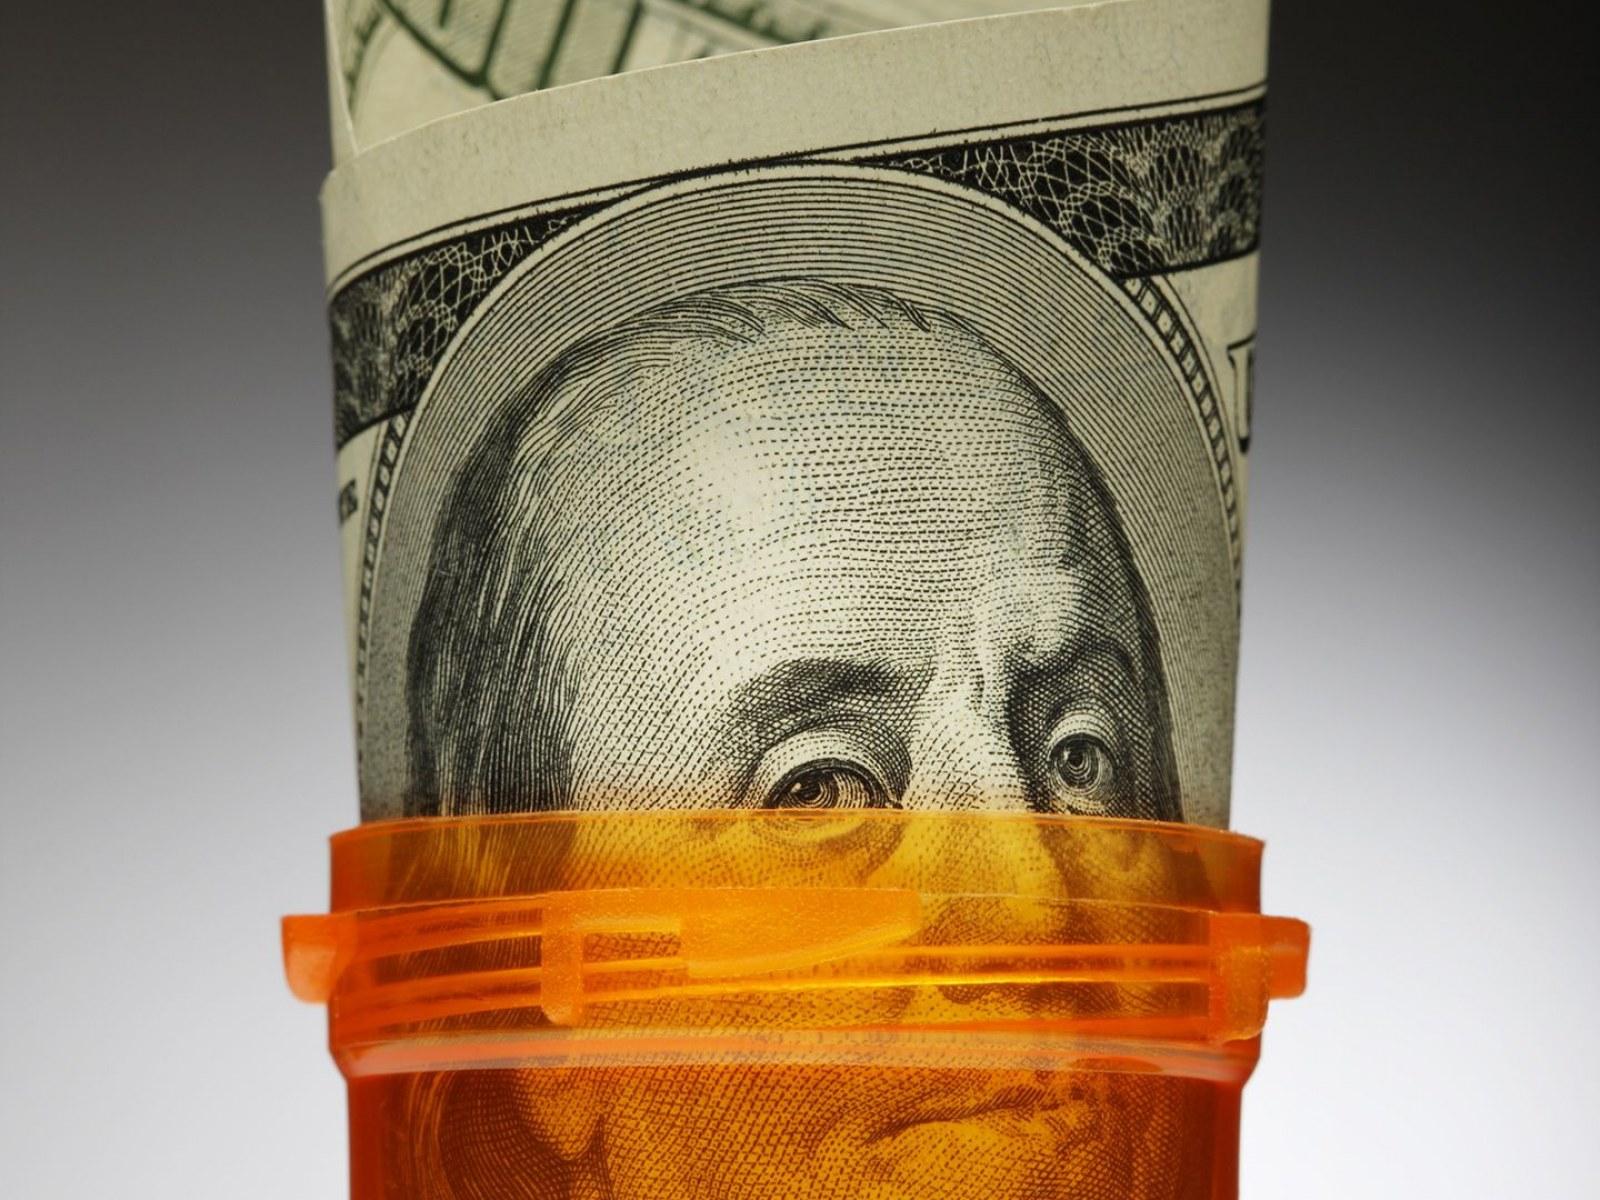 Medication Keeps Getting More Expensive—and Big Pharma Won't